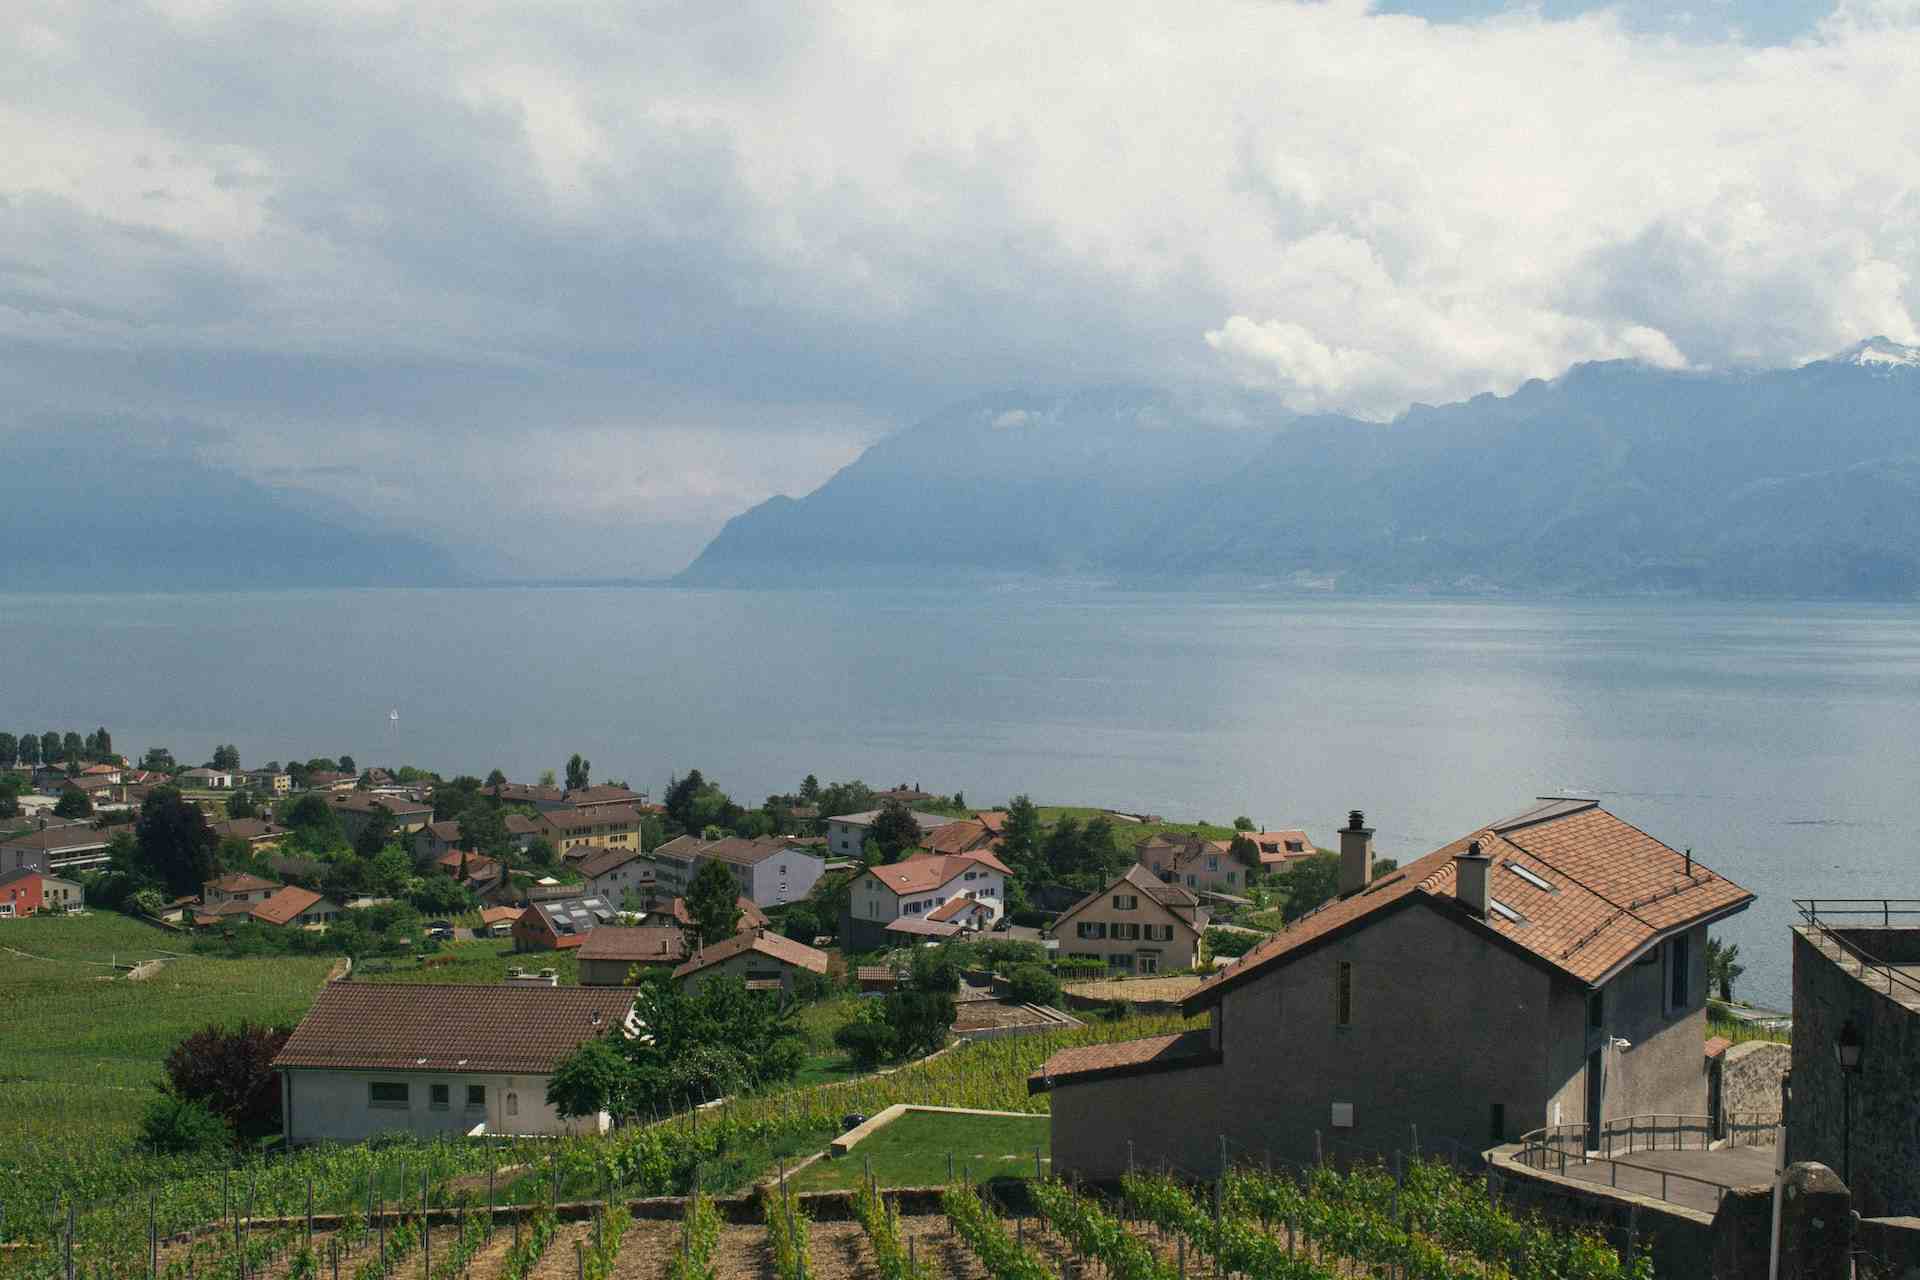 La Ferme Vaudoise, producer in Lausanne canton of Vaud in Switzerland